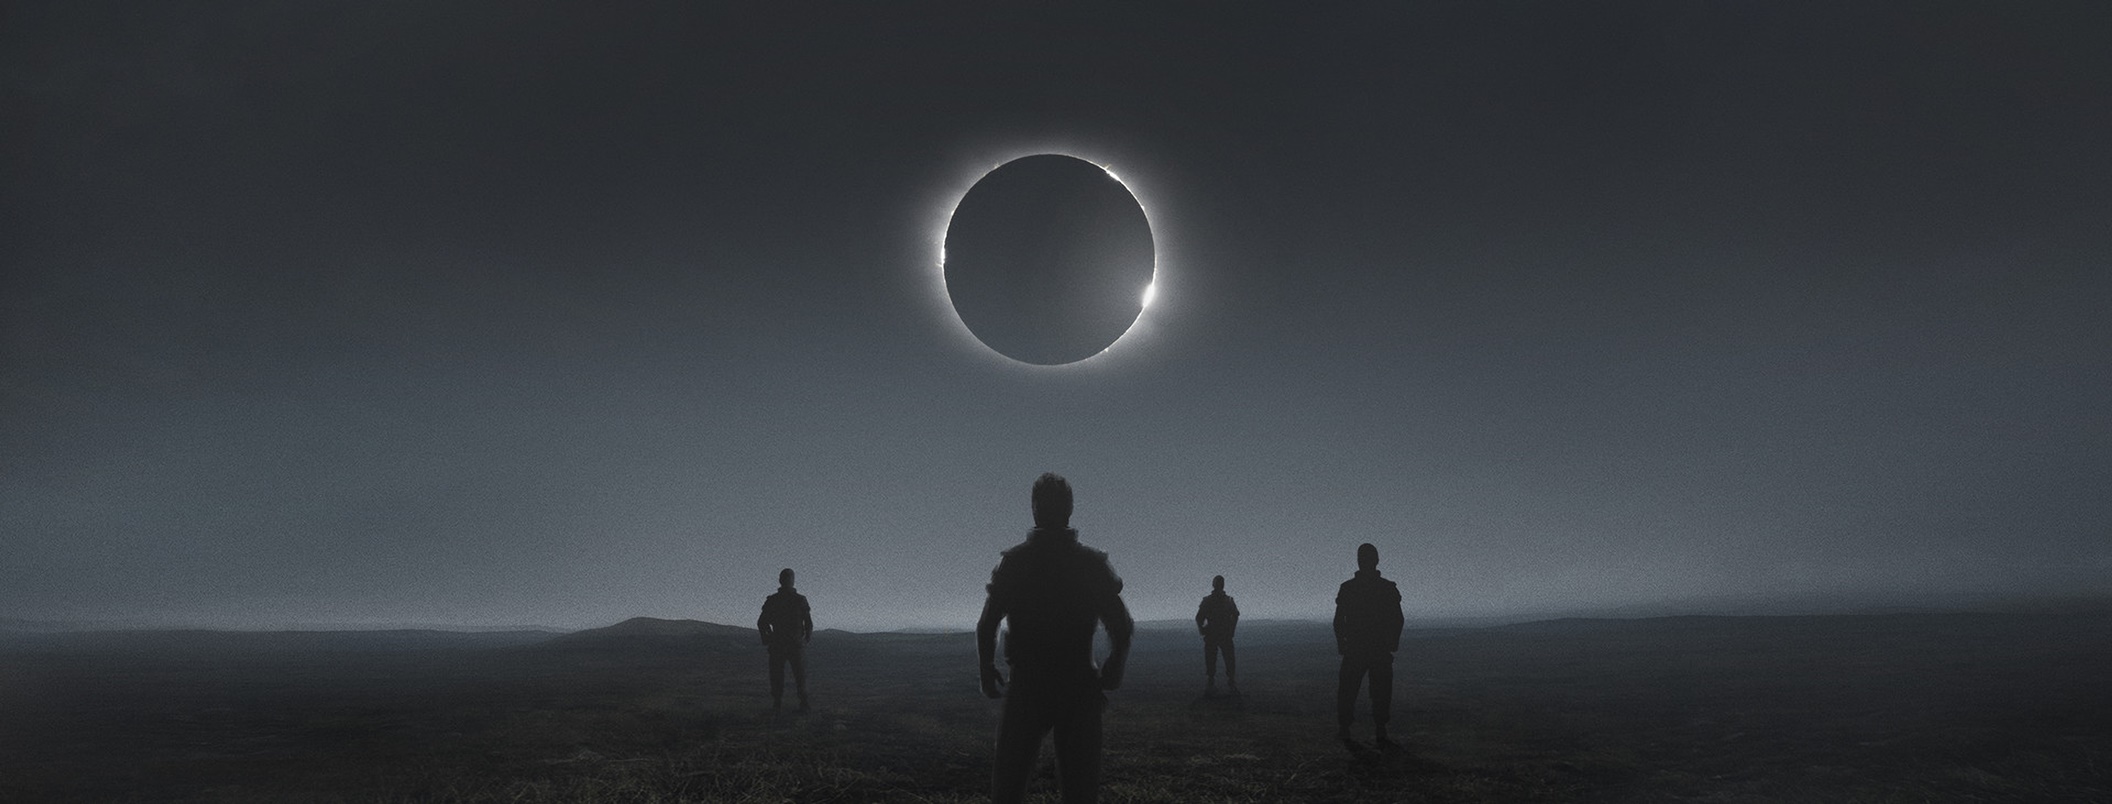 General 2112x804 digital art landscape eclipse  monochrome